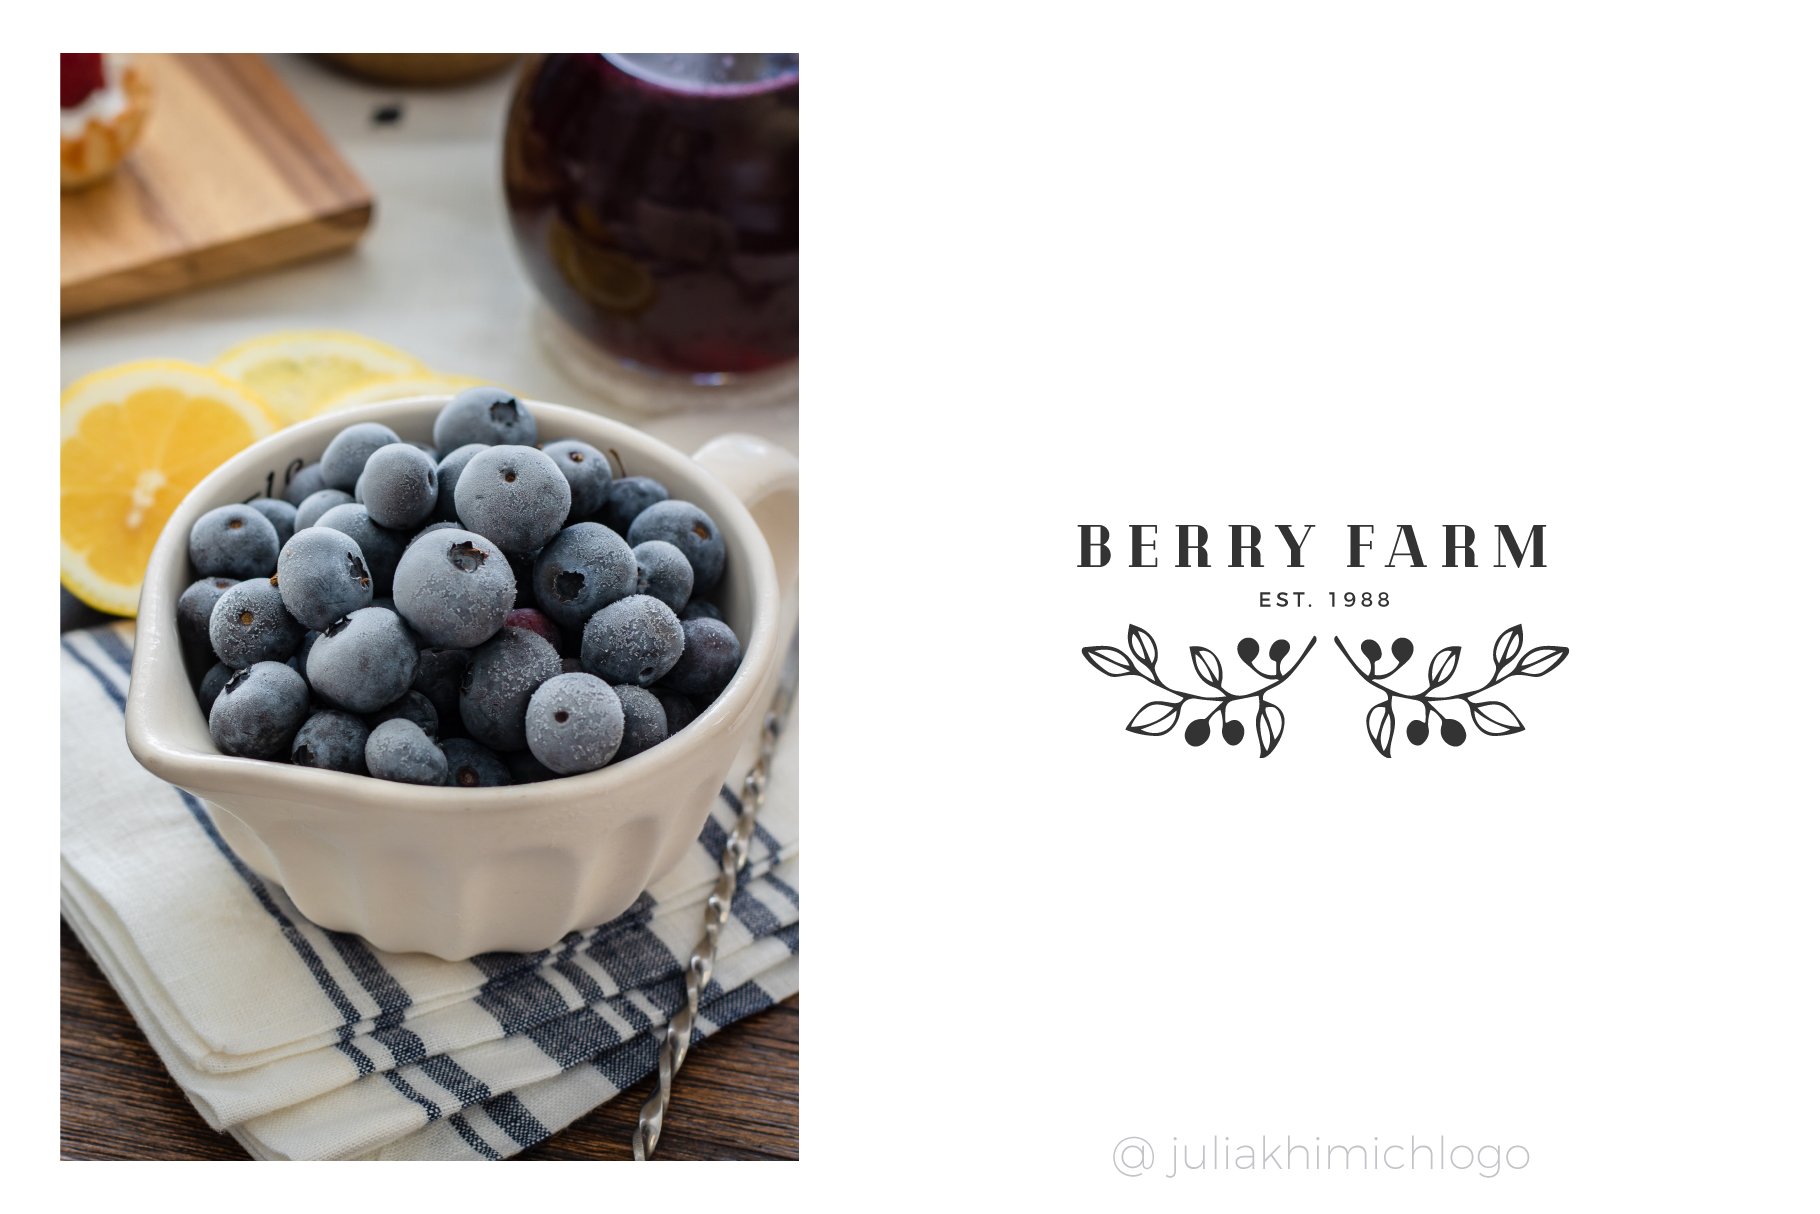 Cute logo for berry farm.